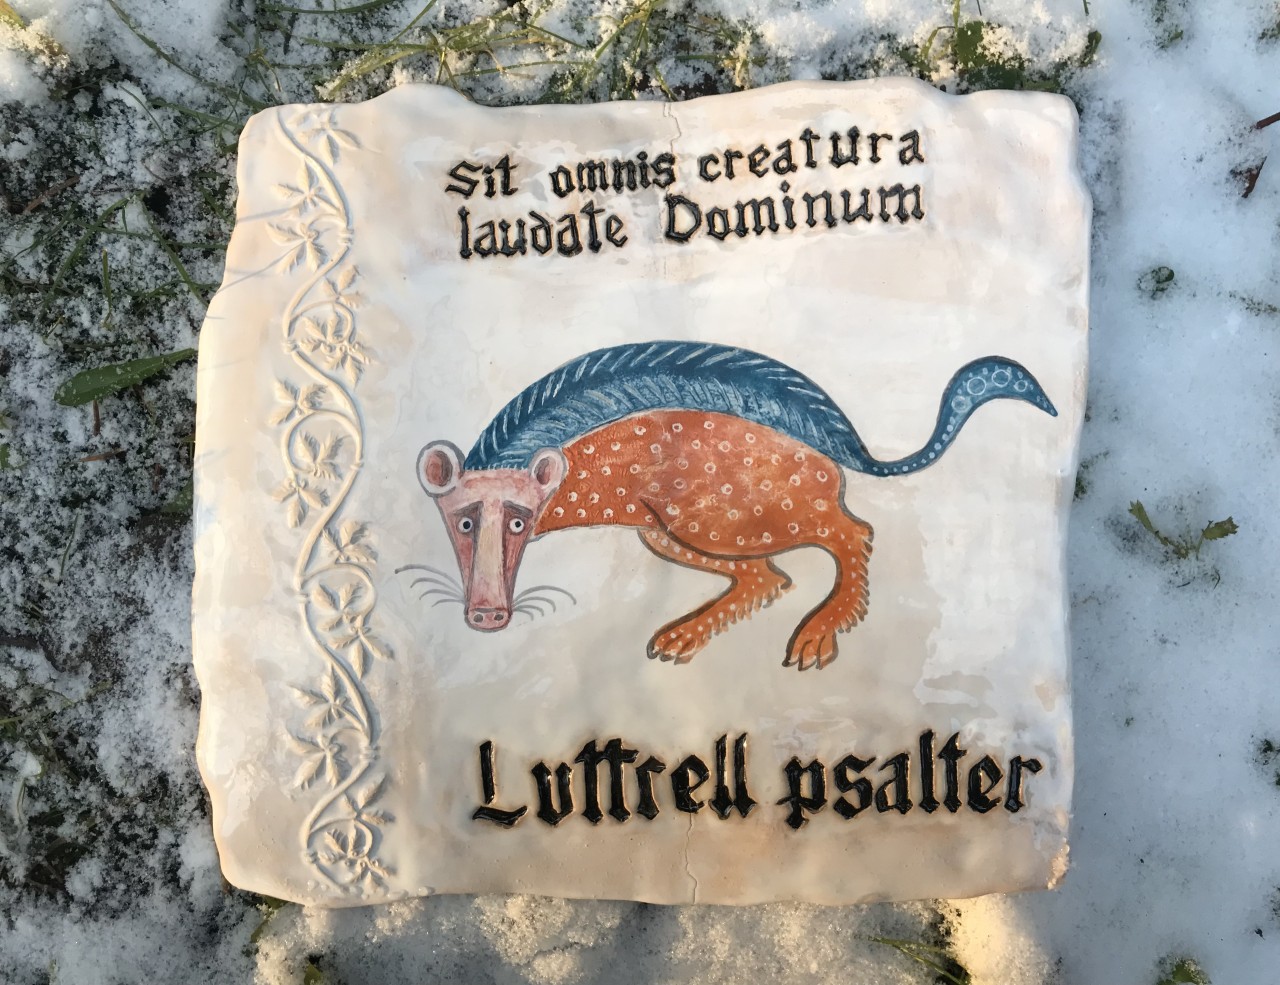 Luttrell psalter Ratus mustatus